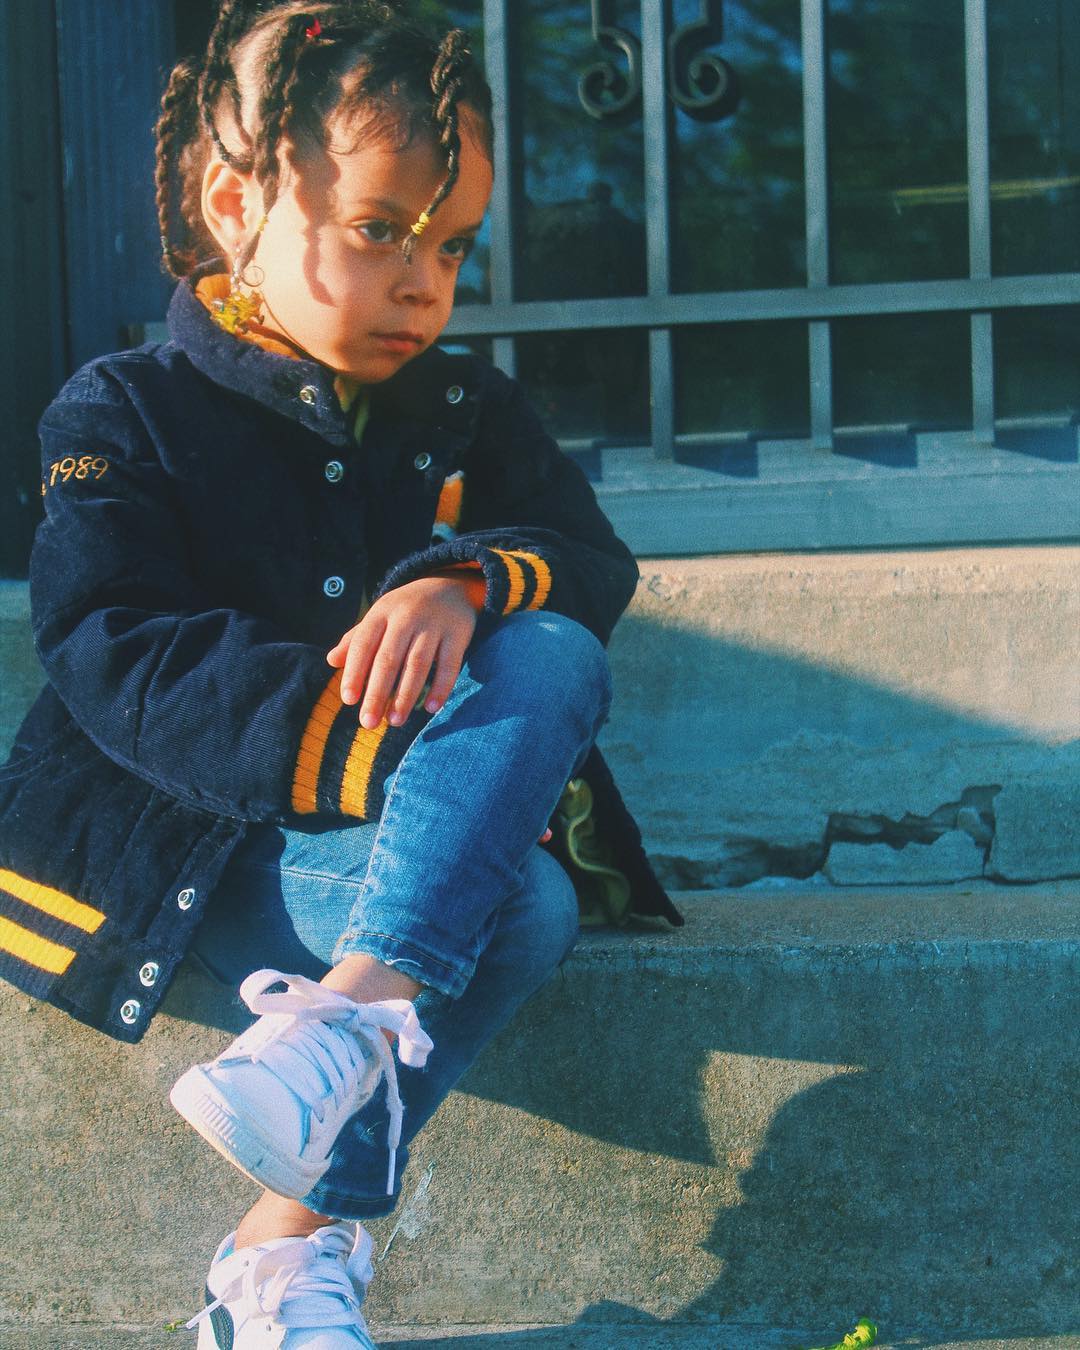 Instagram’s Favorite Toddler Zaza Is A Style Maven